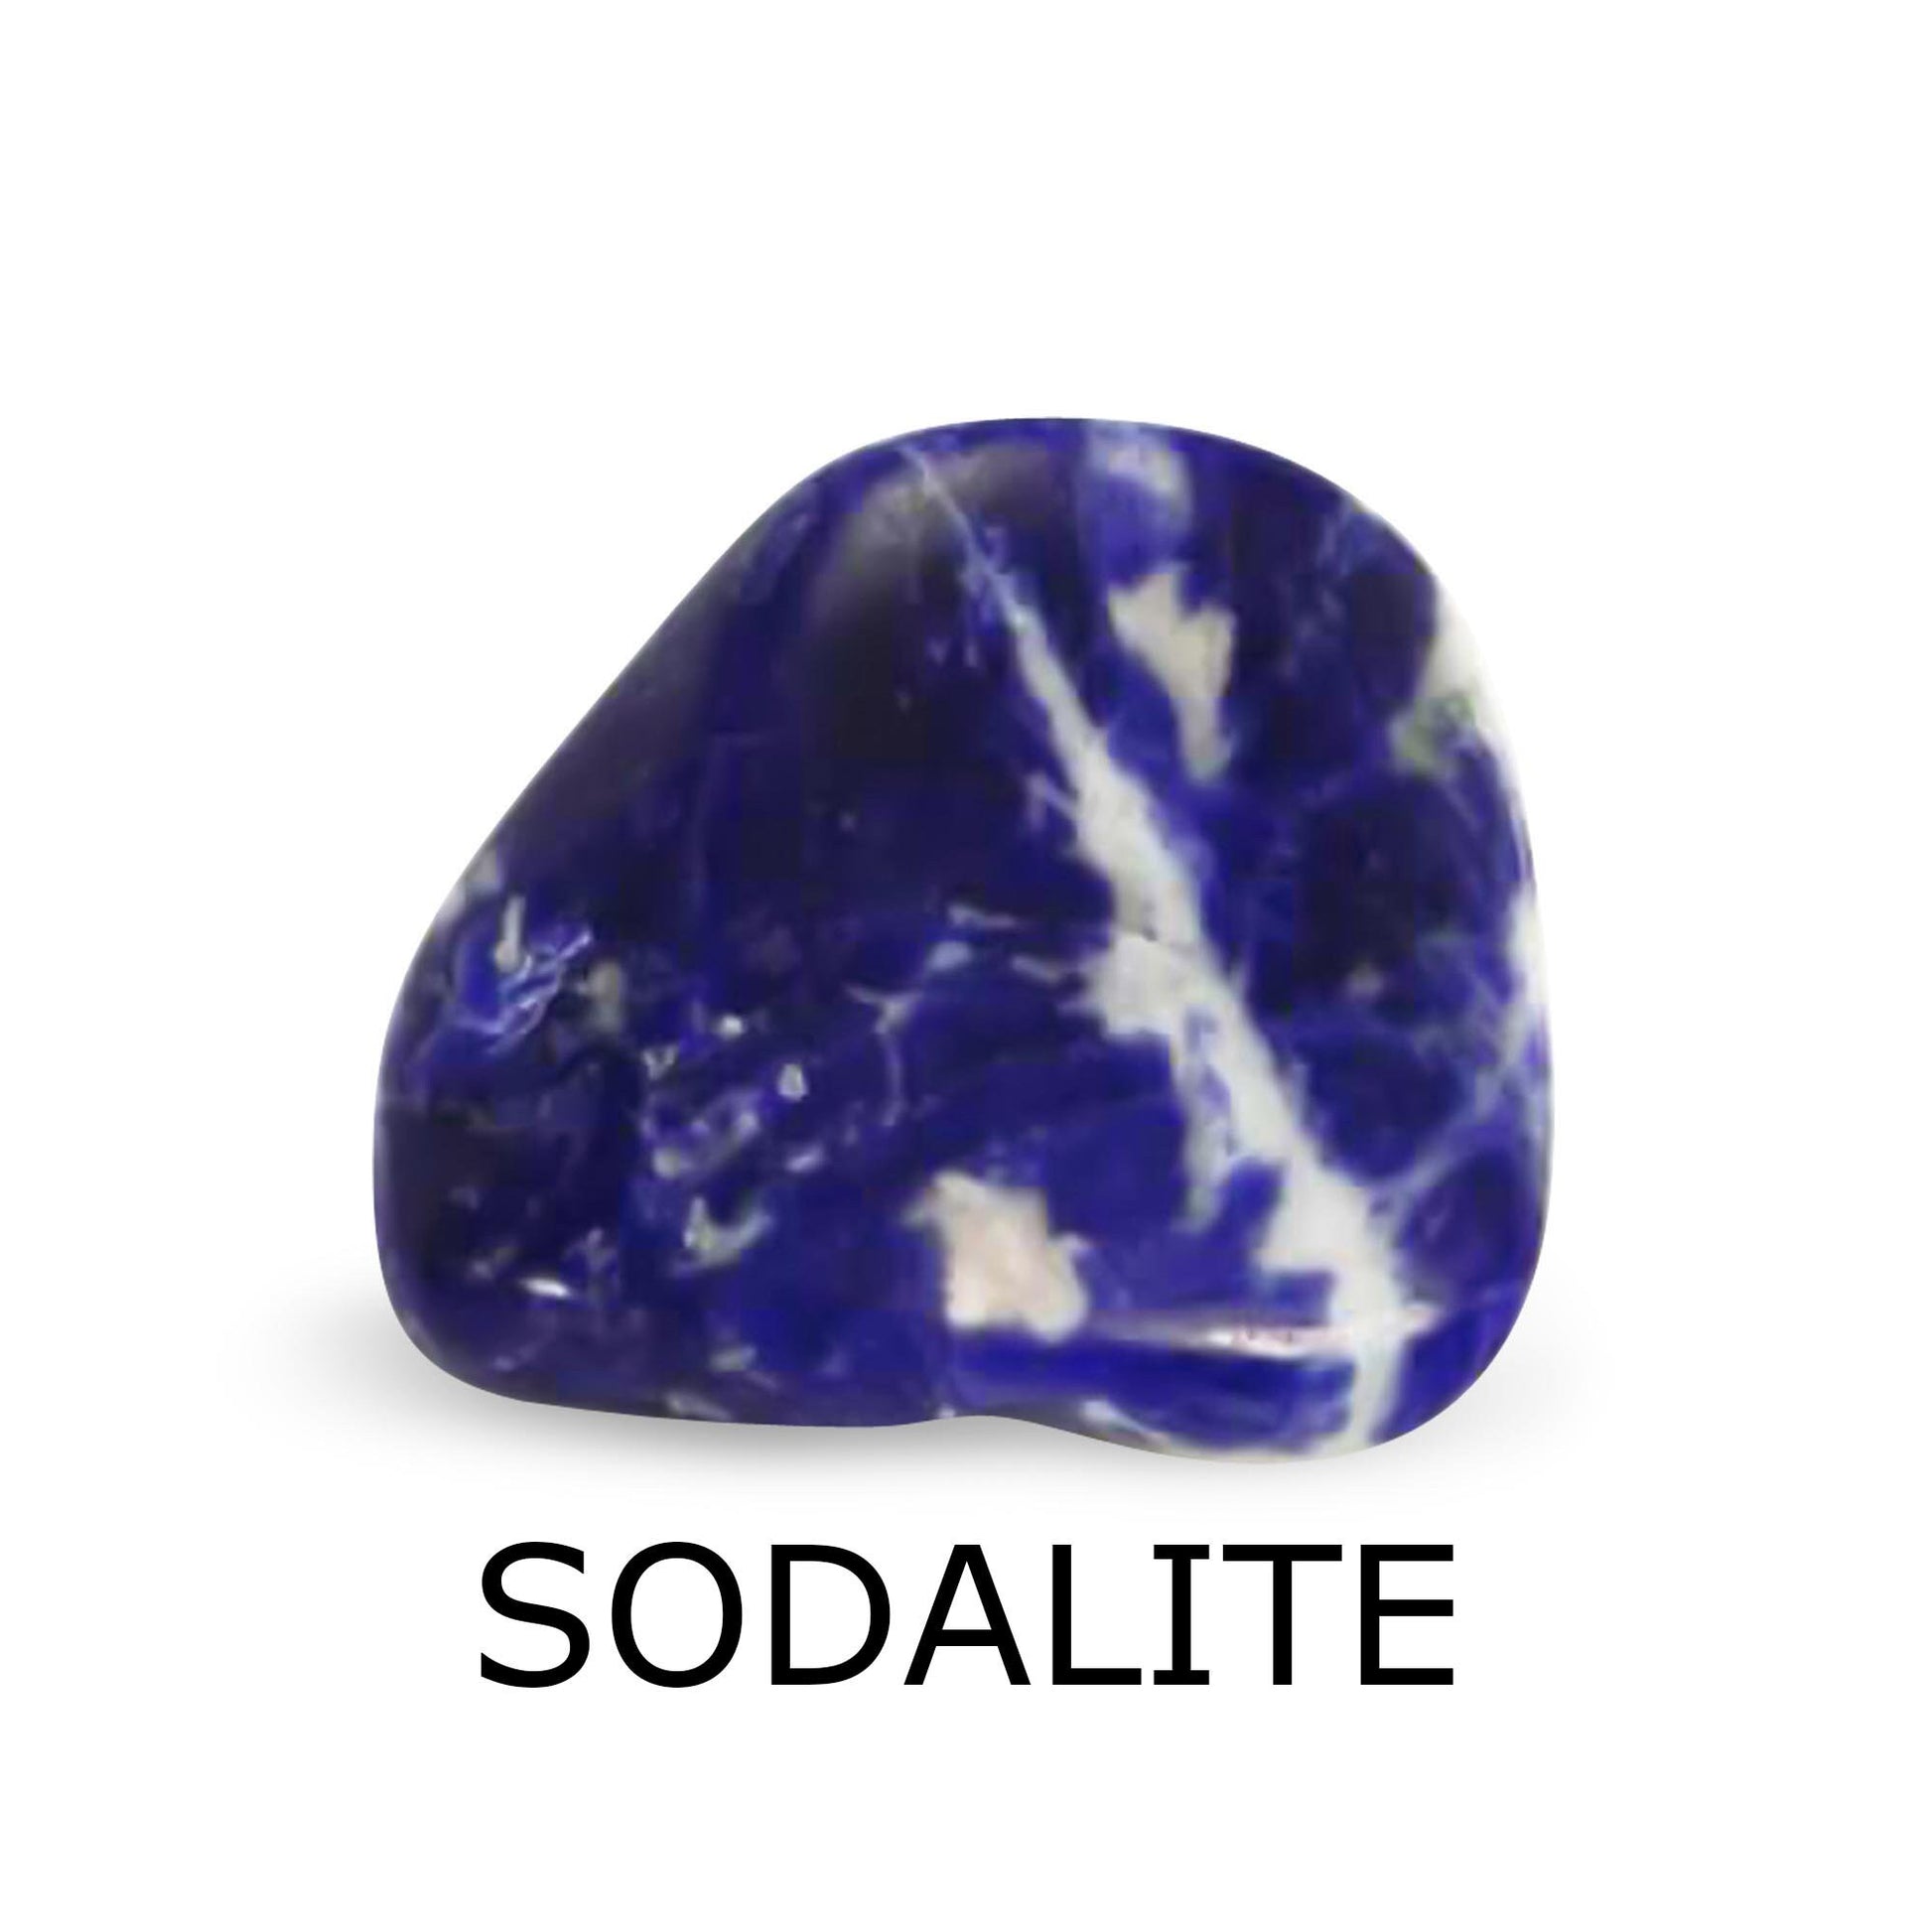 sodalite crystal to alleviate inner turmoil